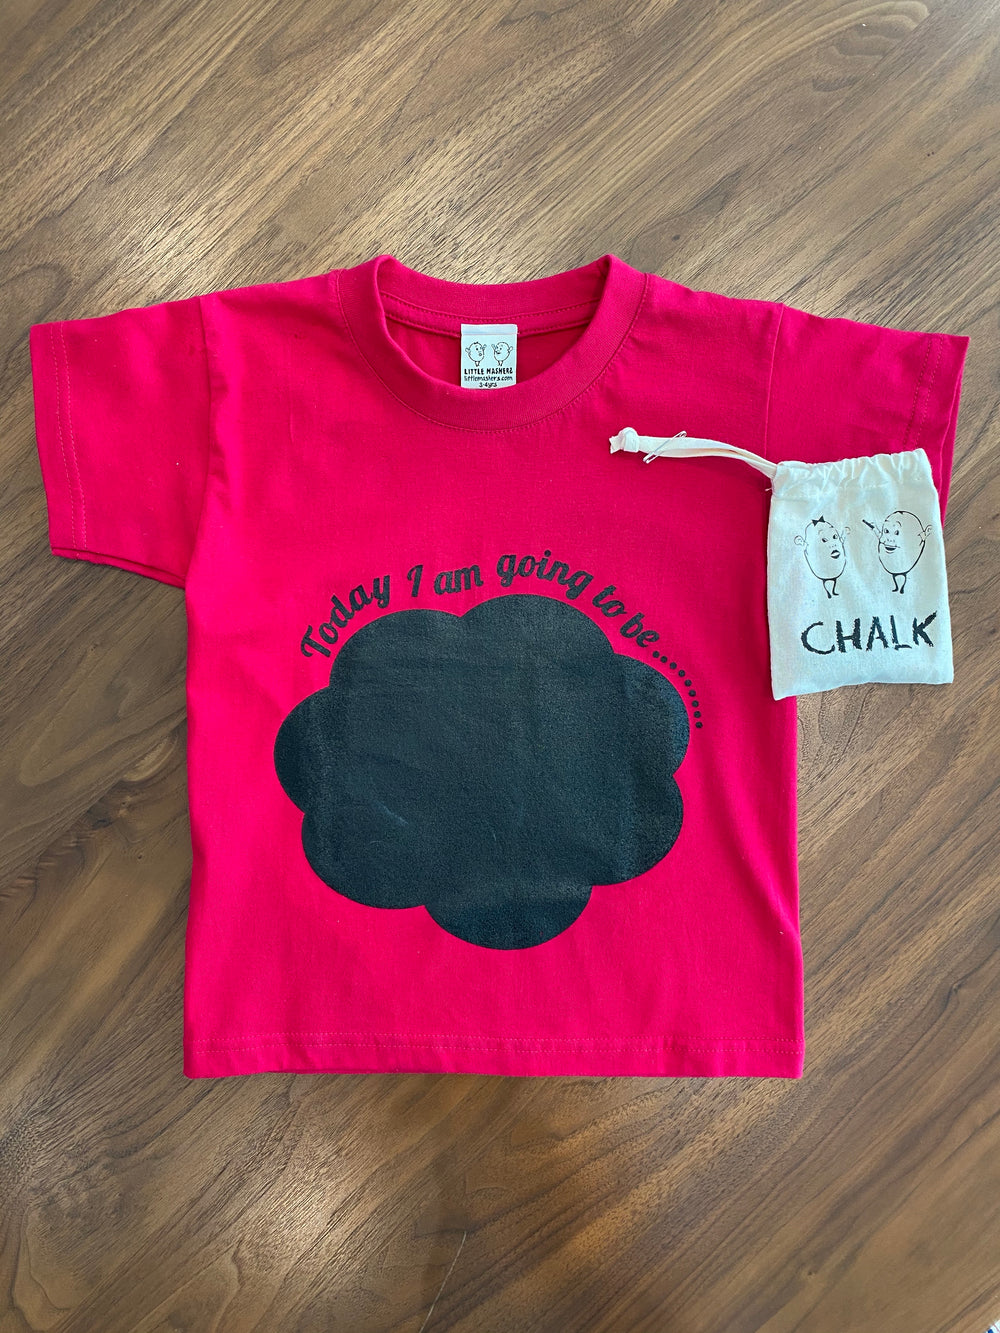 Chalk SS LM T Shirt